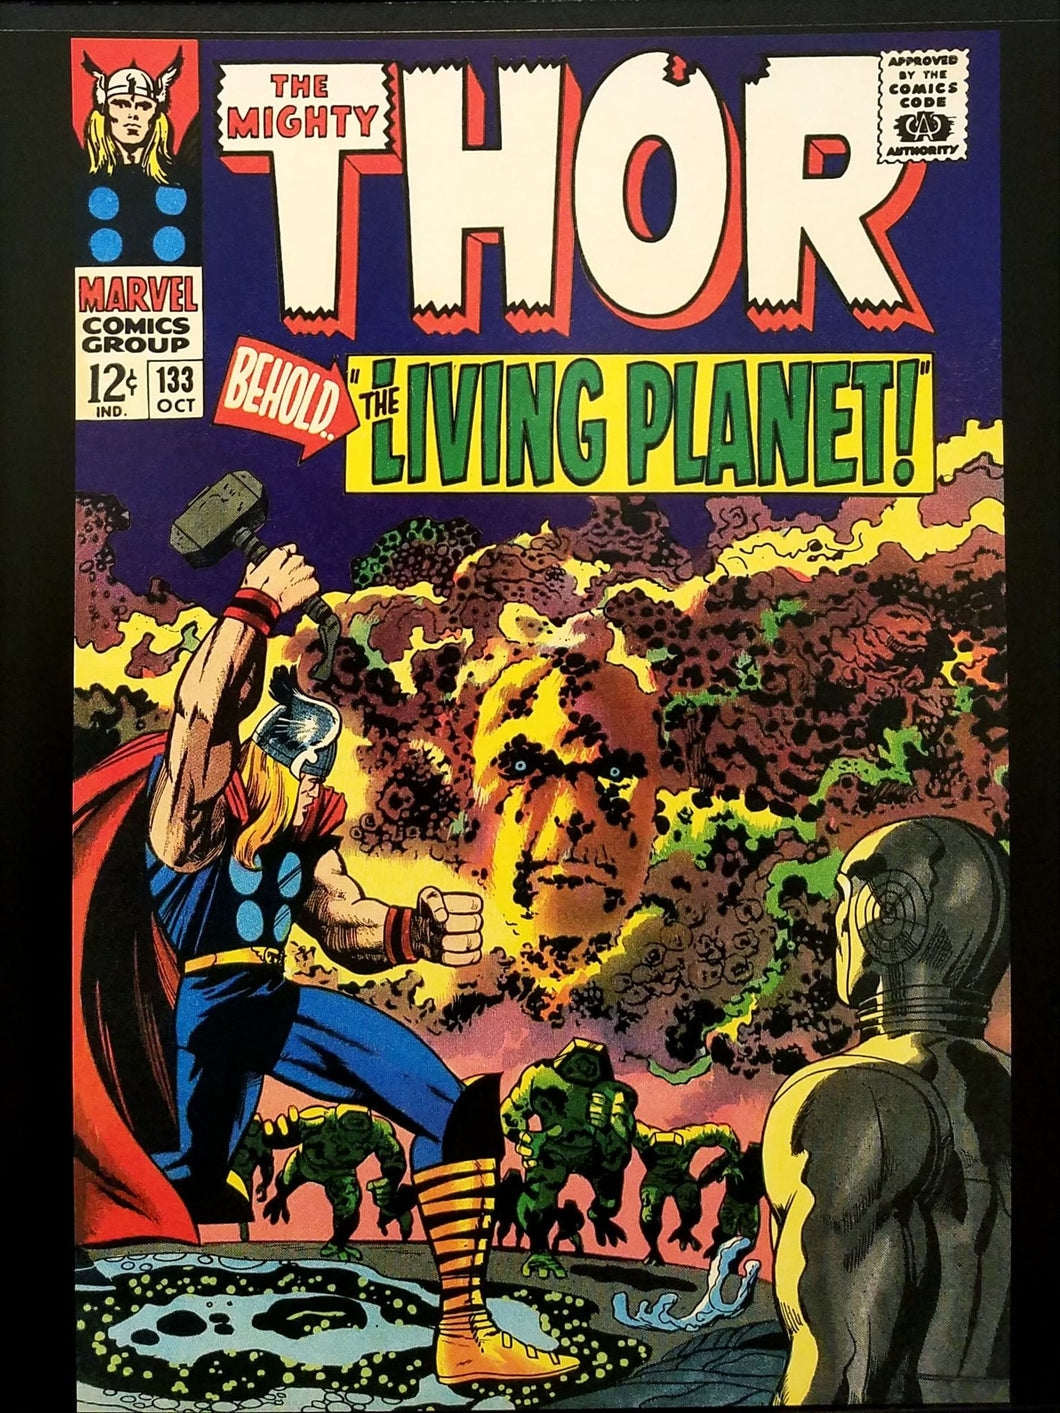 Mighty Thor #133 by Jack Kirby 11x14 FRAMED Art Print, Vintage Marvel Comics